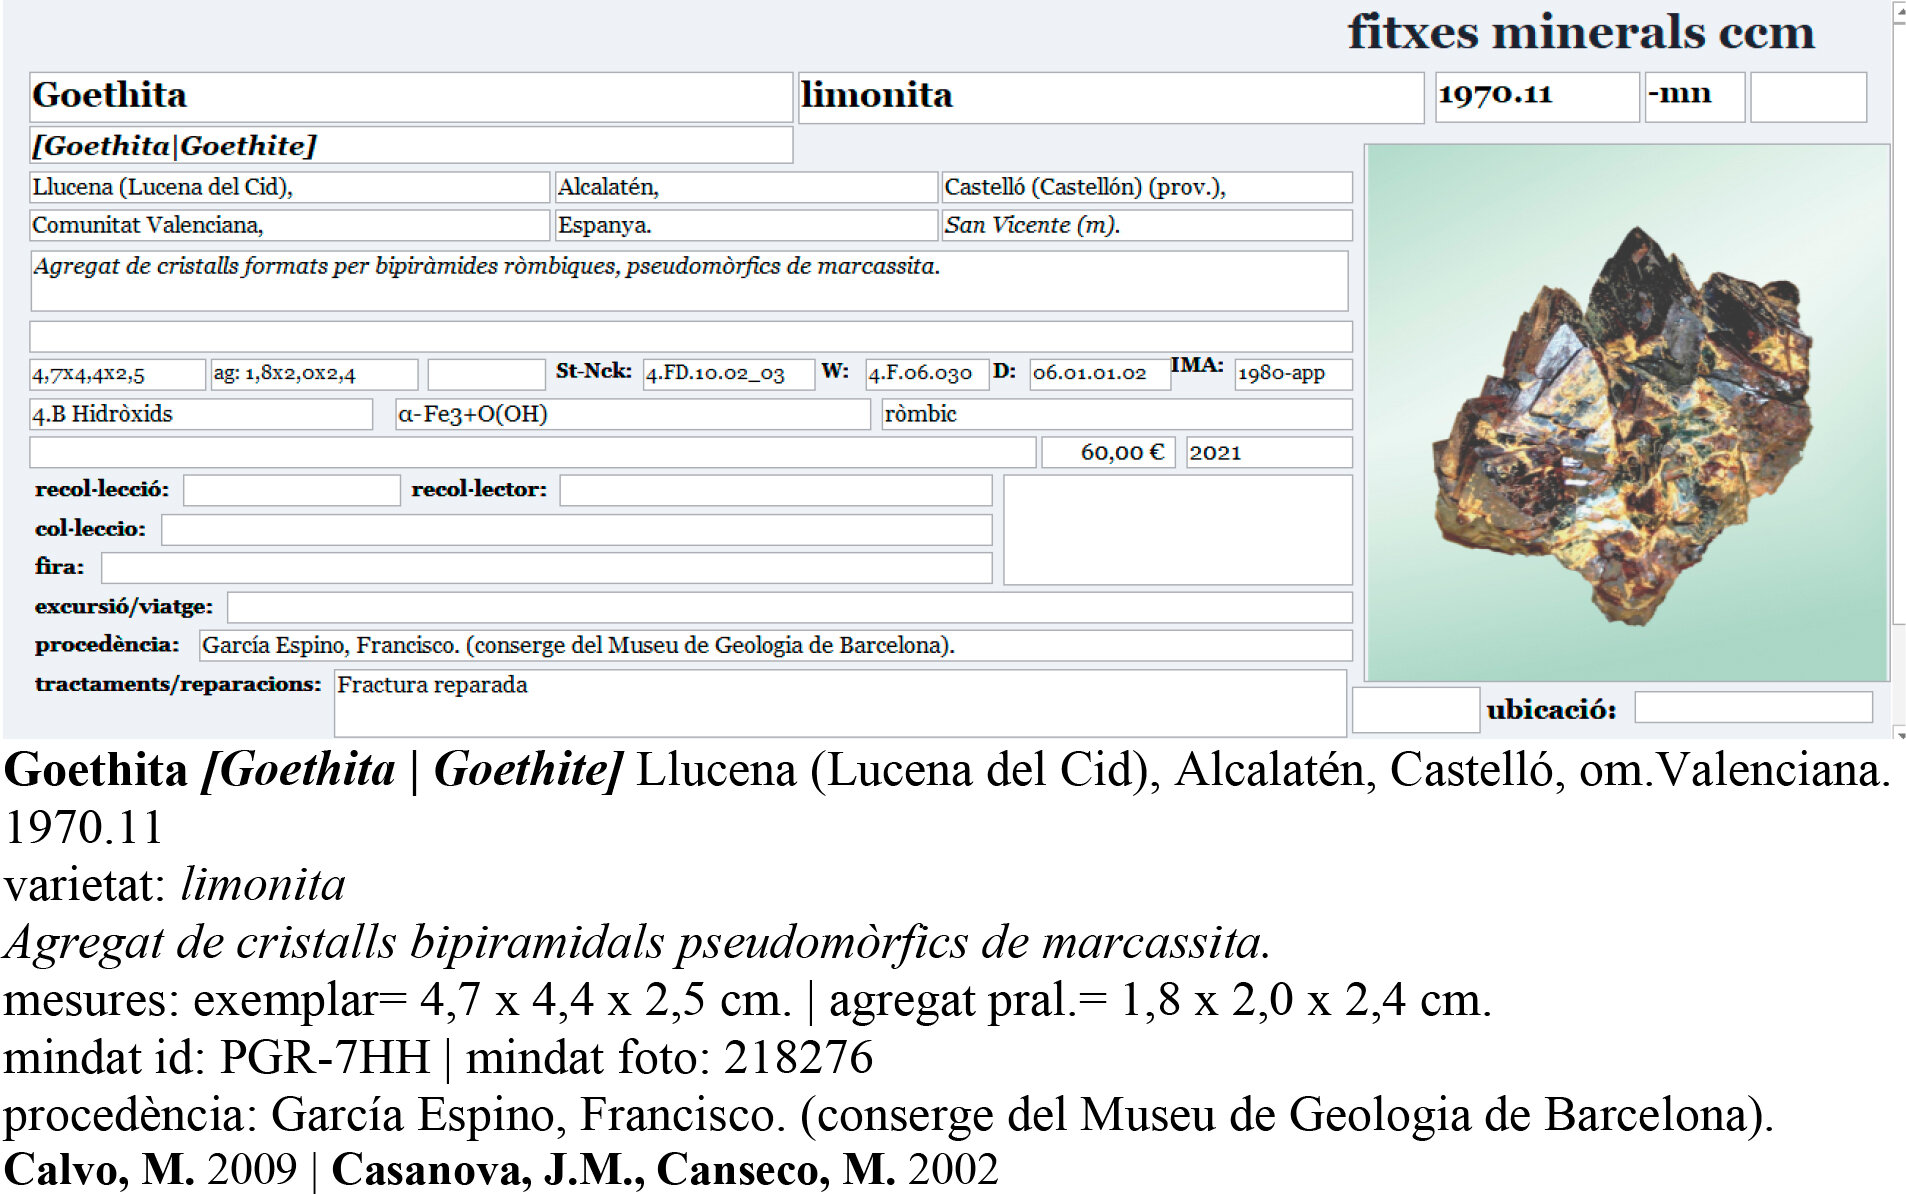 specimens/s_imagesCM/Goethite-18CBR40_e.jpg